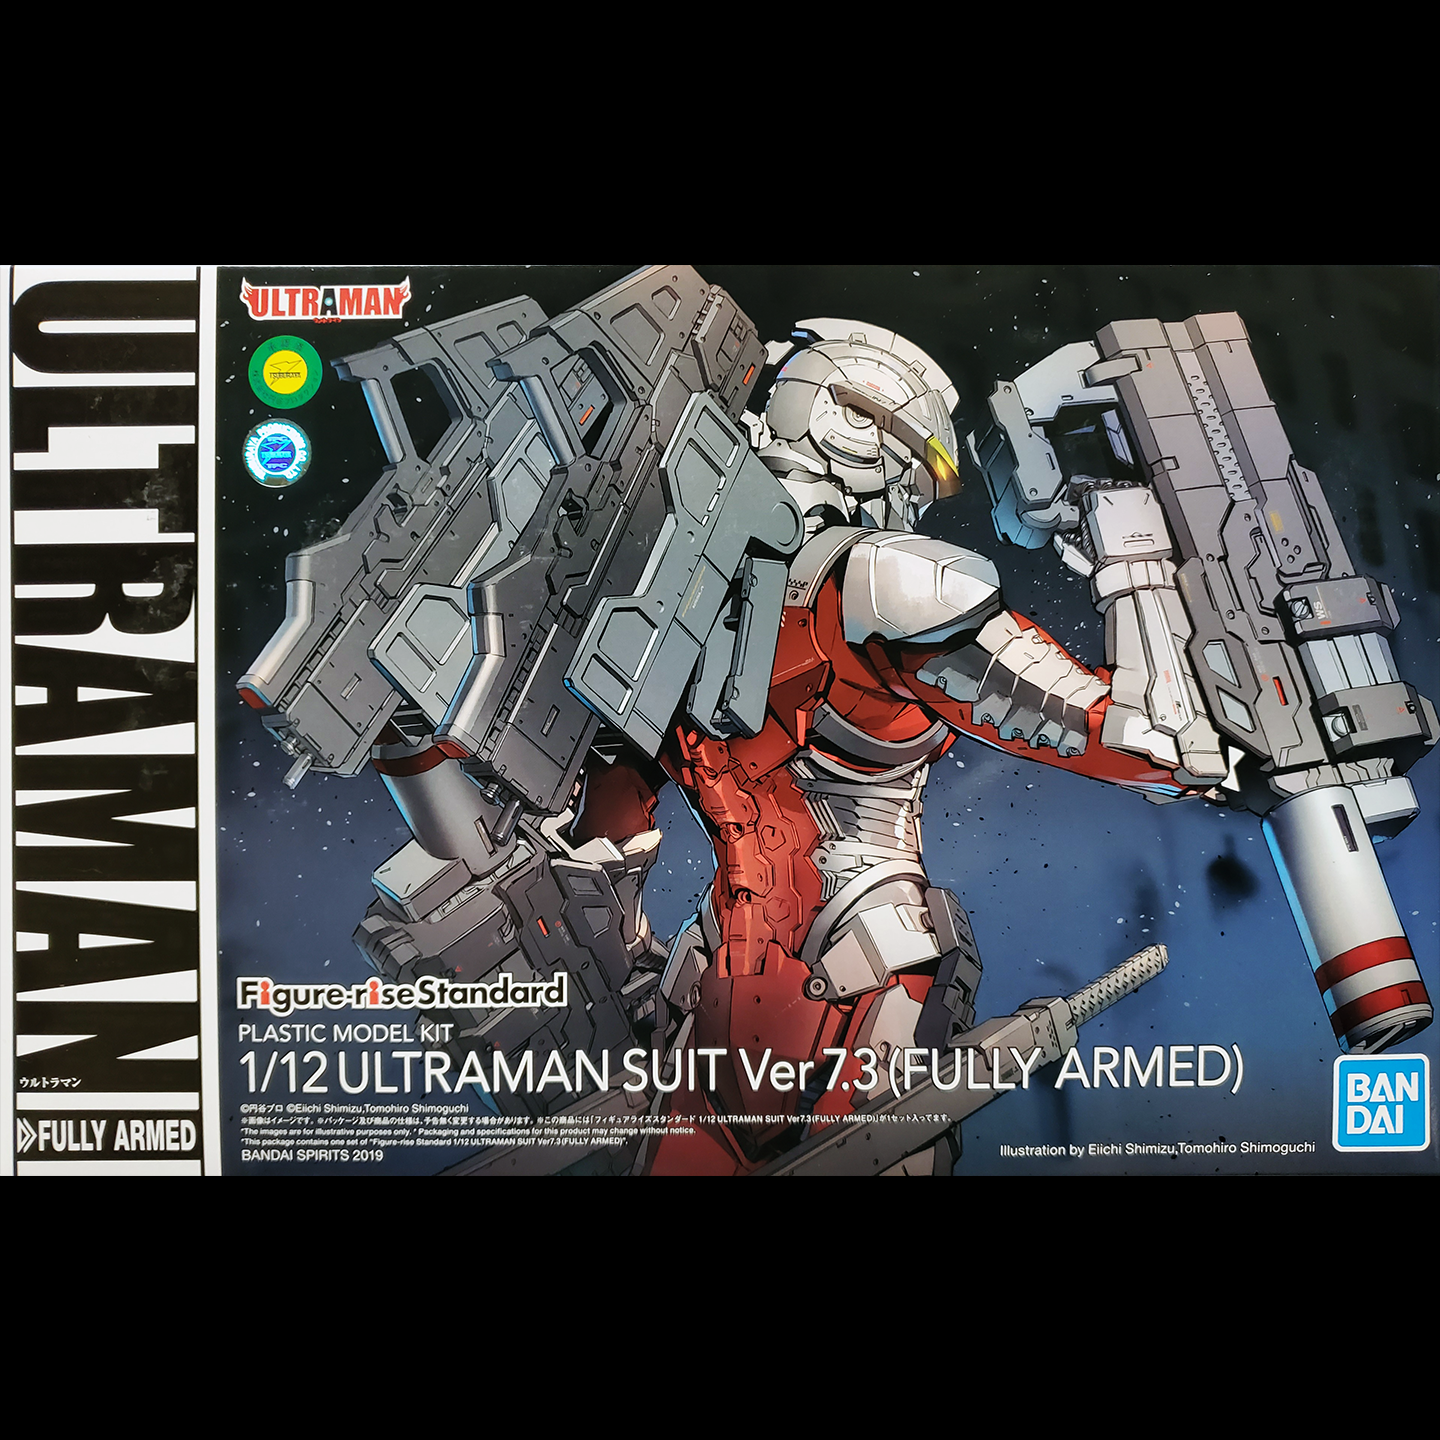 Figure-rise Standard 1/12 Ultraman Suit Ver 7.3 (FULLY ARMED